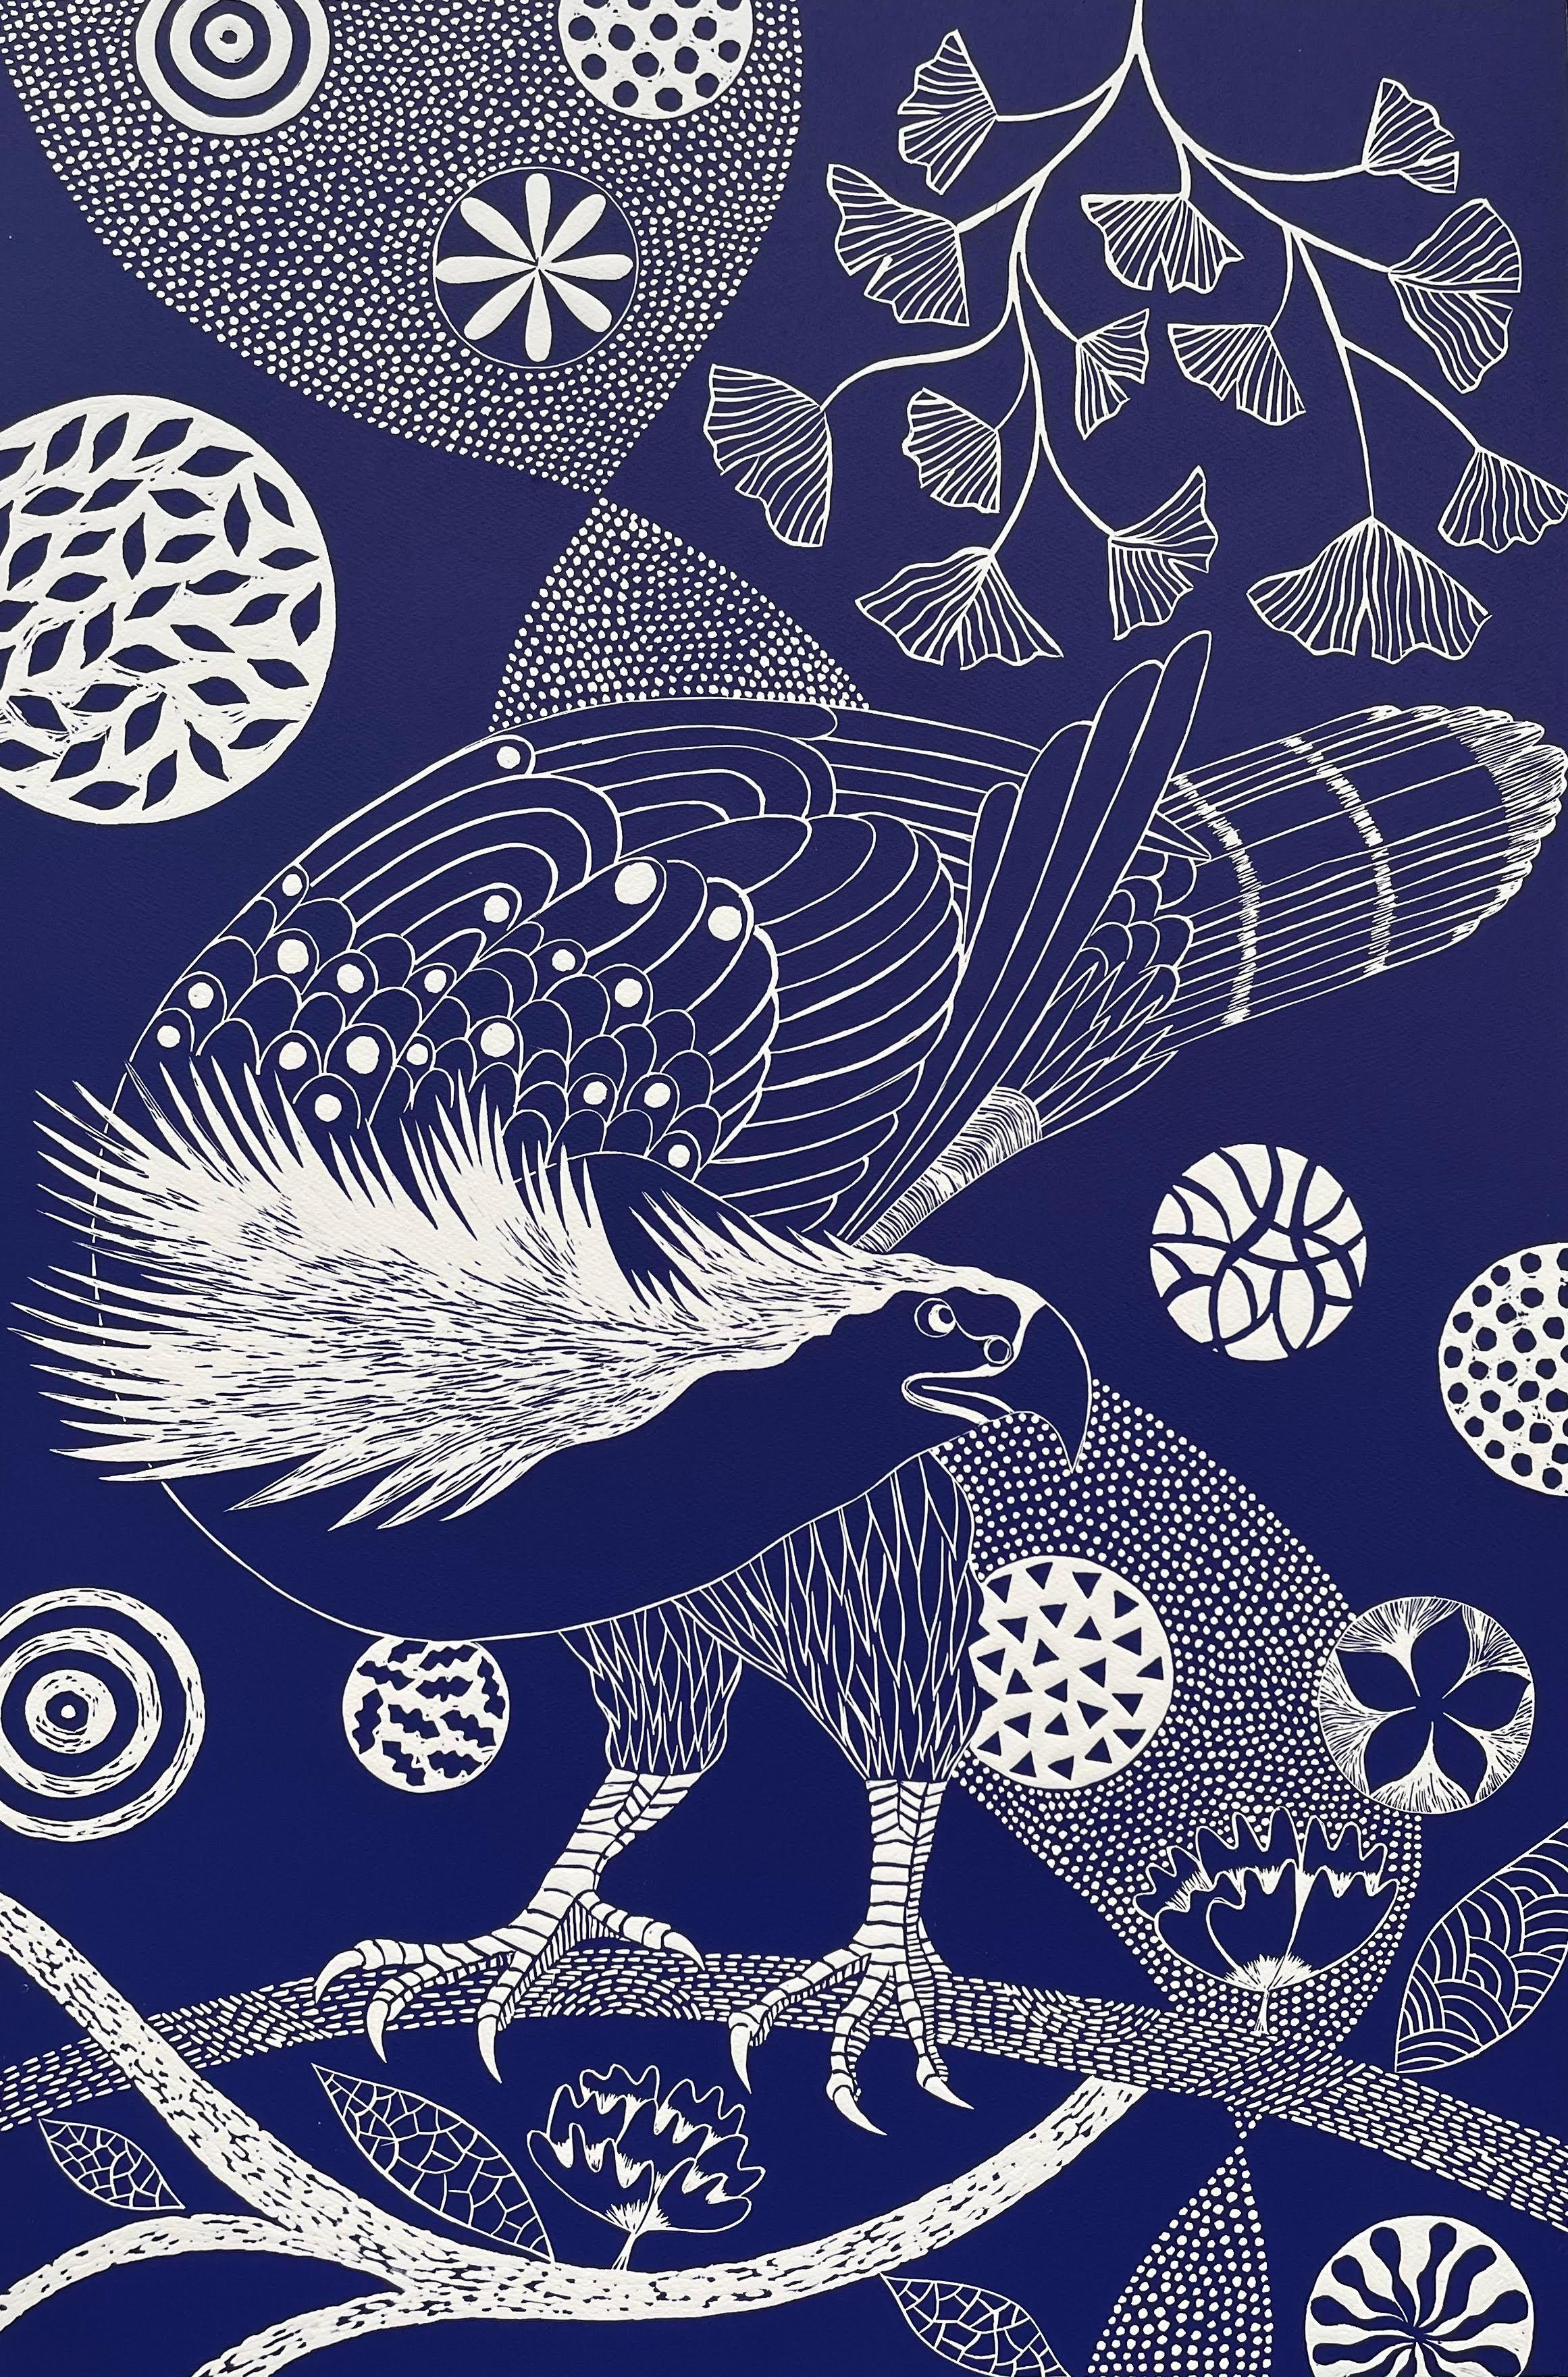 "Reigning and Roosting   Impression d'oiseaux en linoléum d'inspiration artisanale, bleu profond